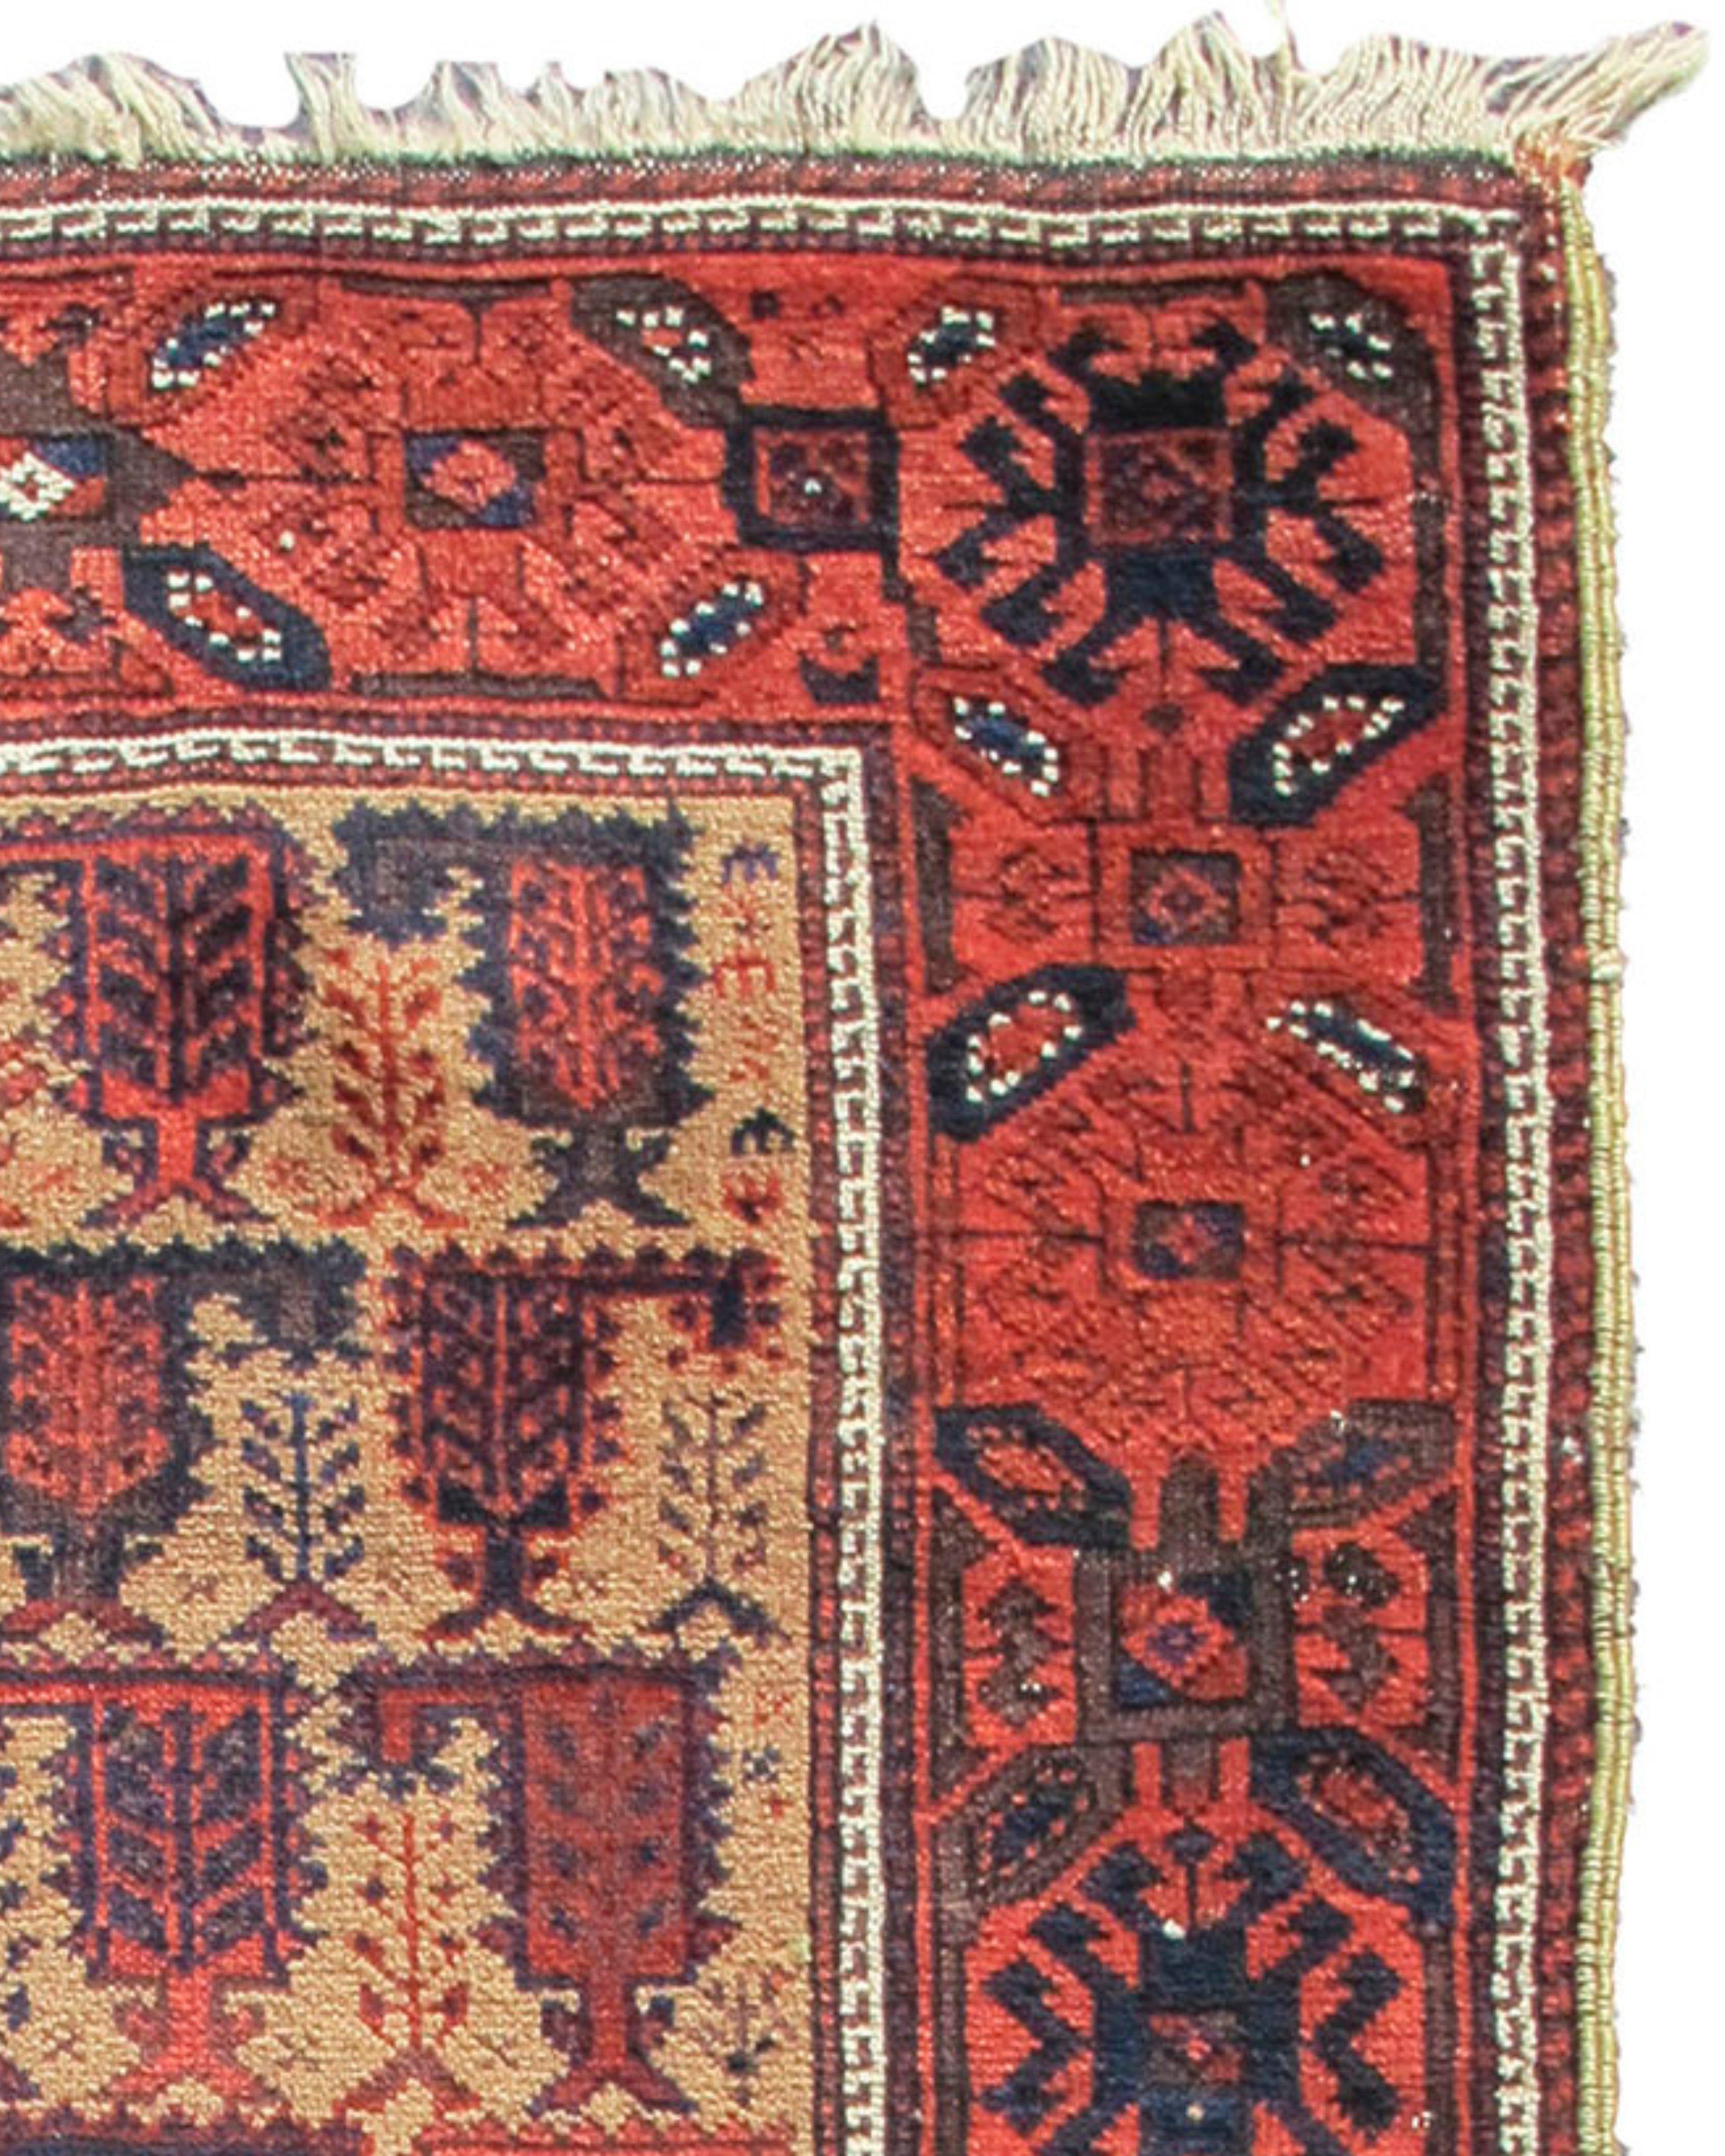 Ancien tapis persan Baluch, fin du 19e siècle

Informations supplémentaires :
Dimensions : 2'10